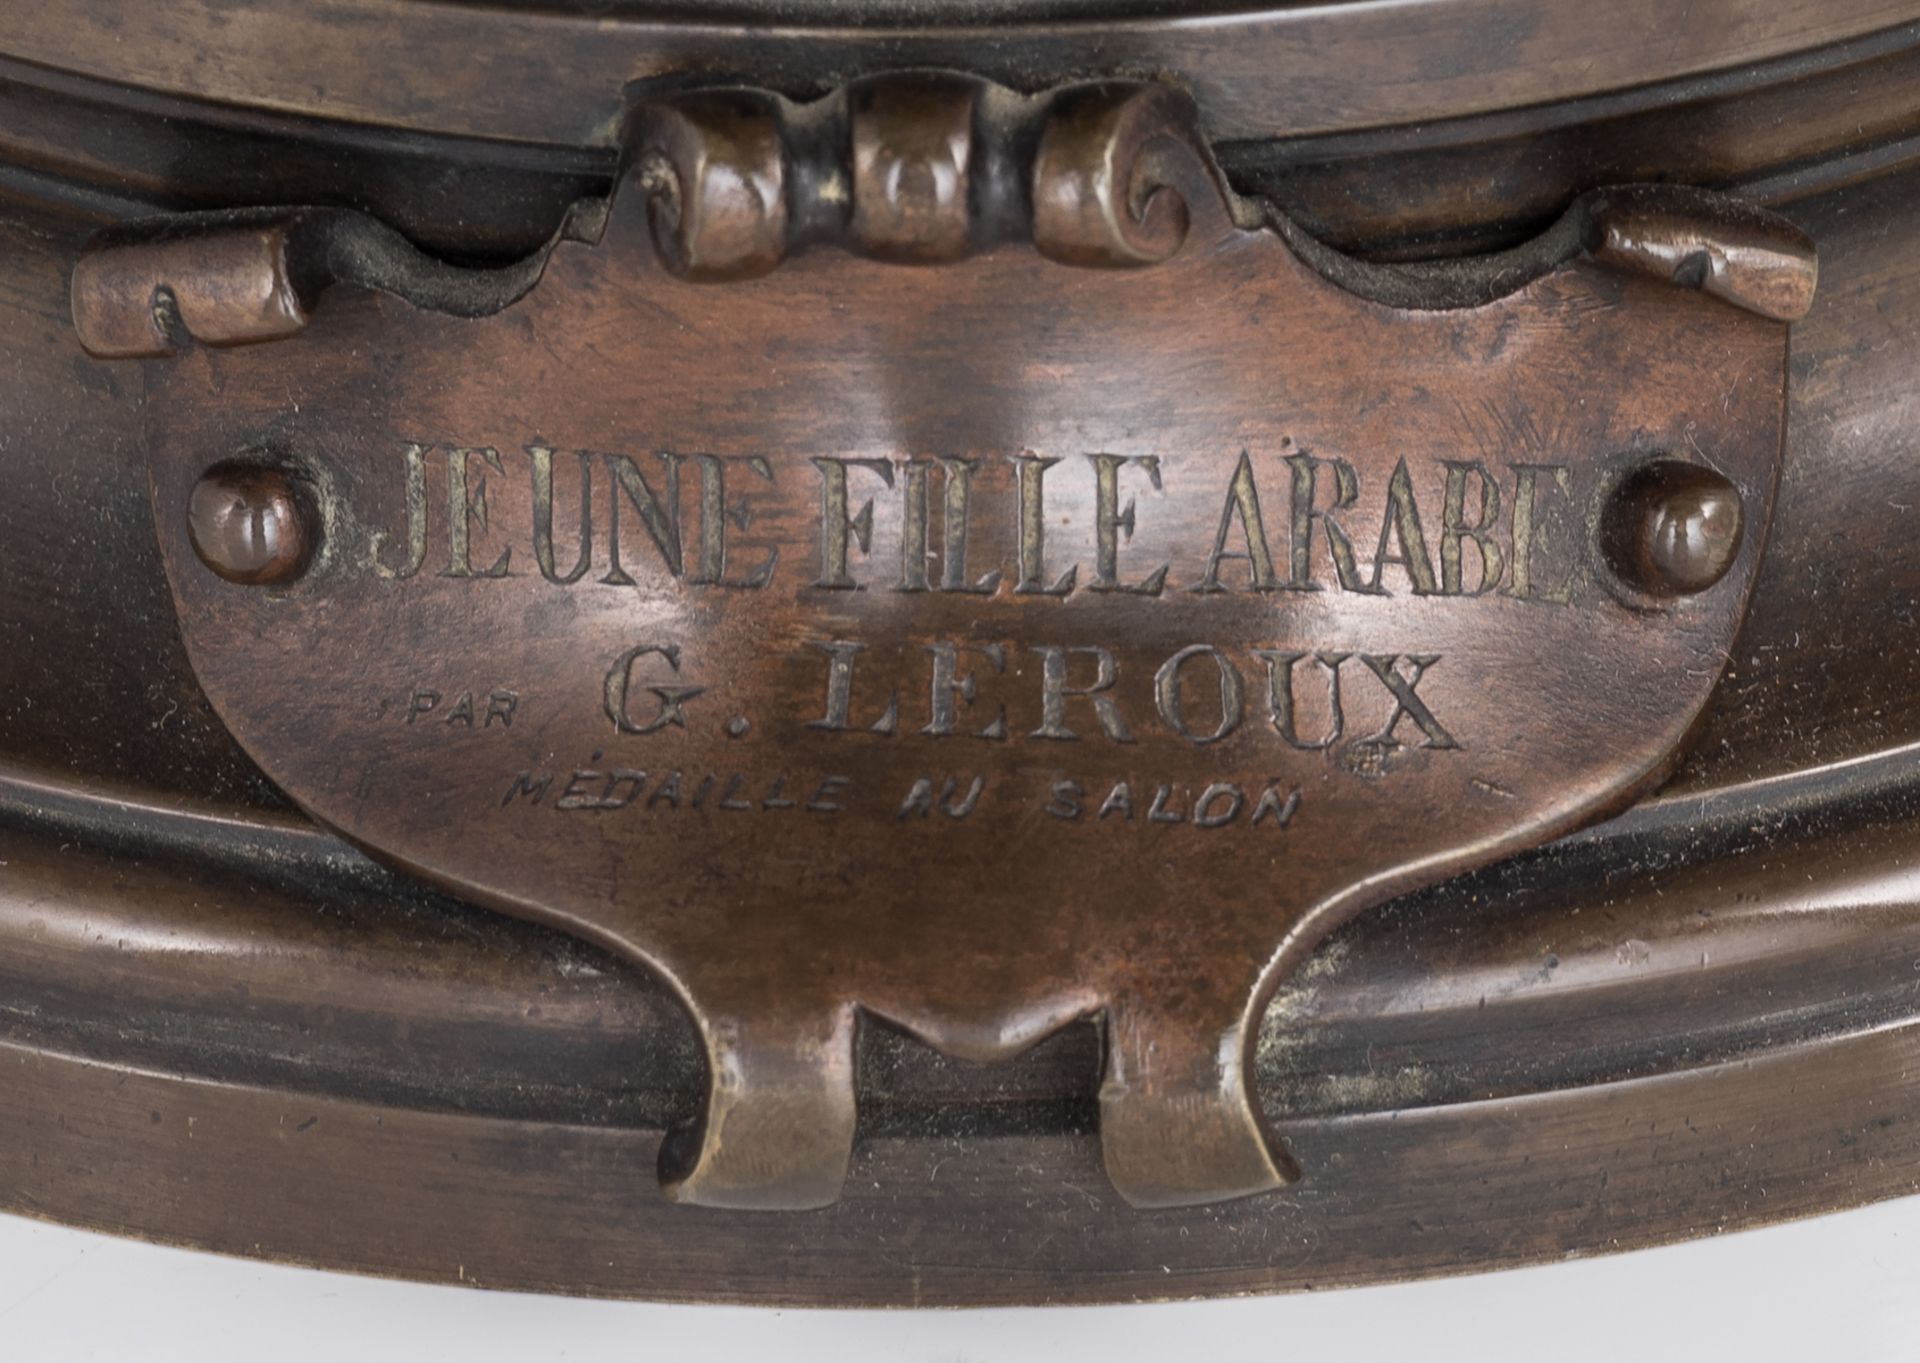 Leroux G., 'Jeune fille Arabe', patinated bronze, H 63 cm - Image 7 of 7